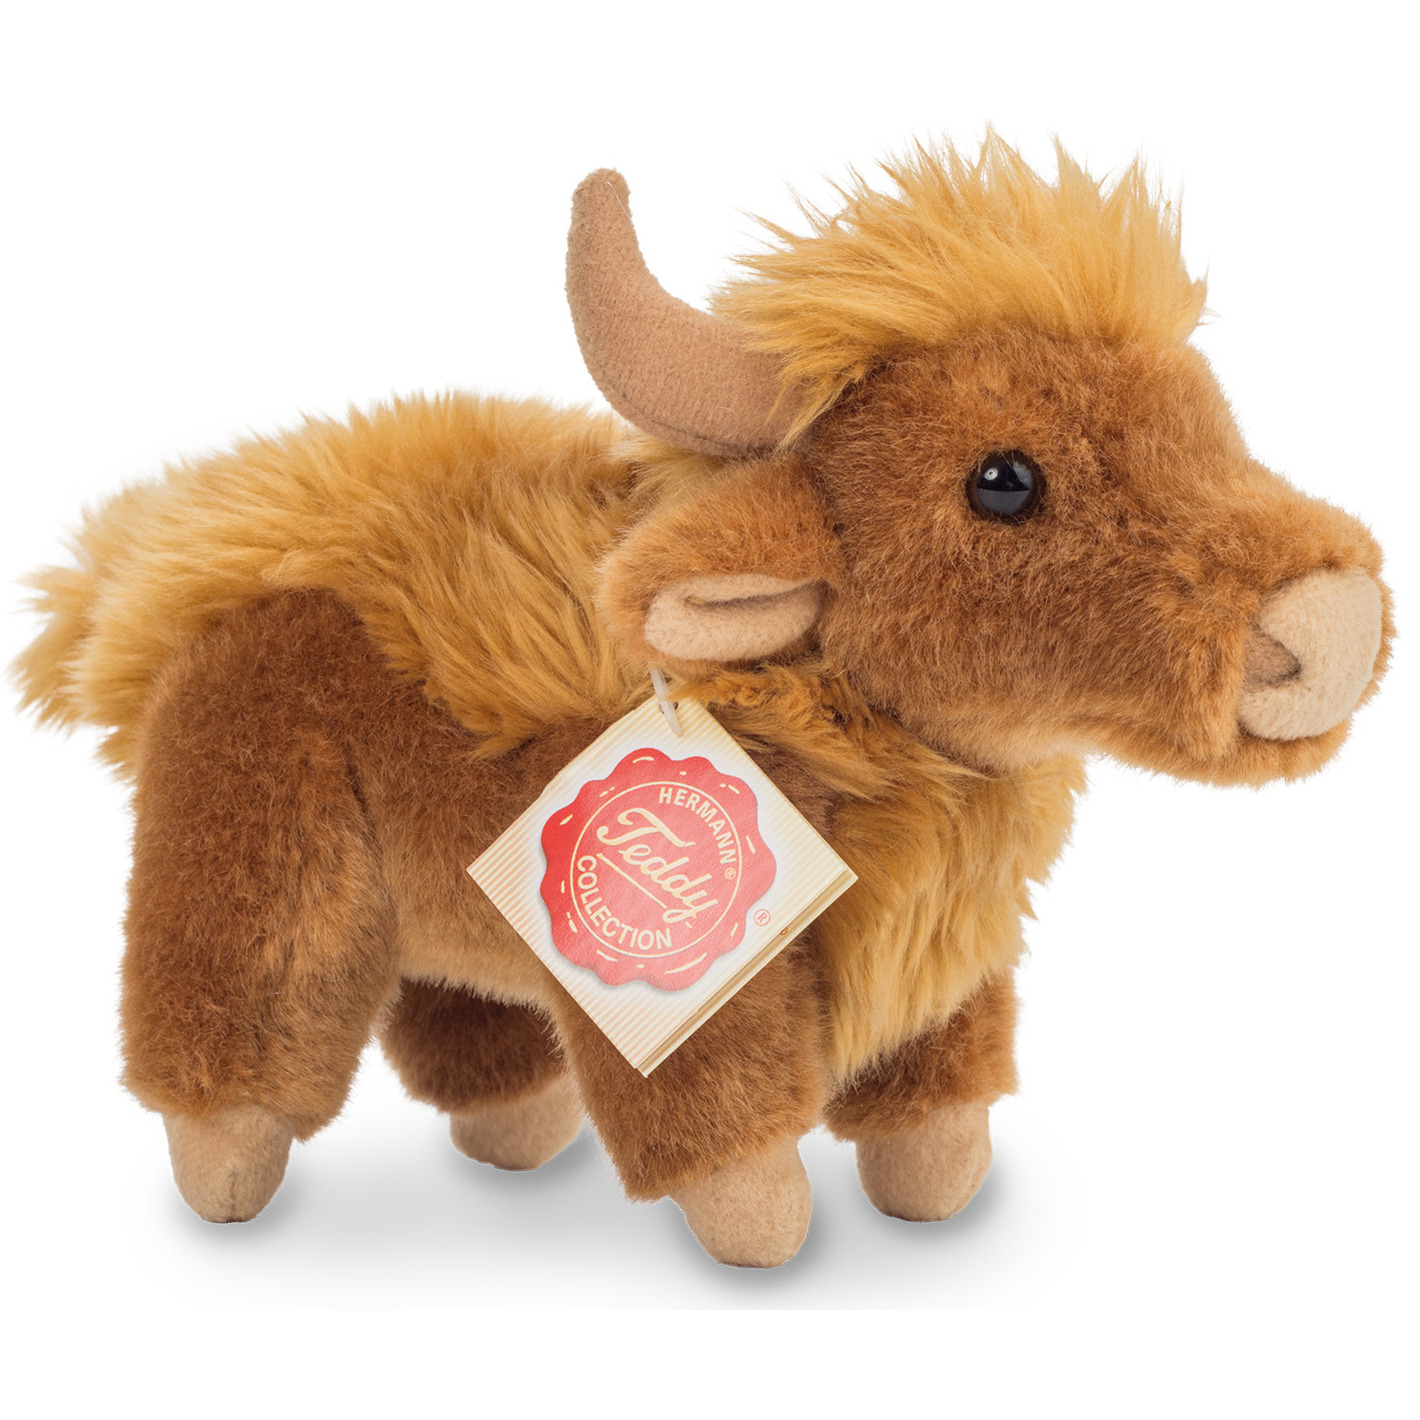 Knuffeldier Schotse hooglander koe zachte pluche stof premium kwaliteit knuffels bruin 17 cm